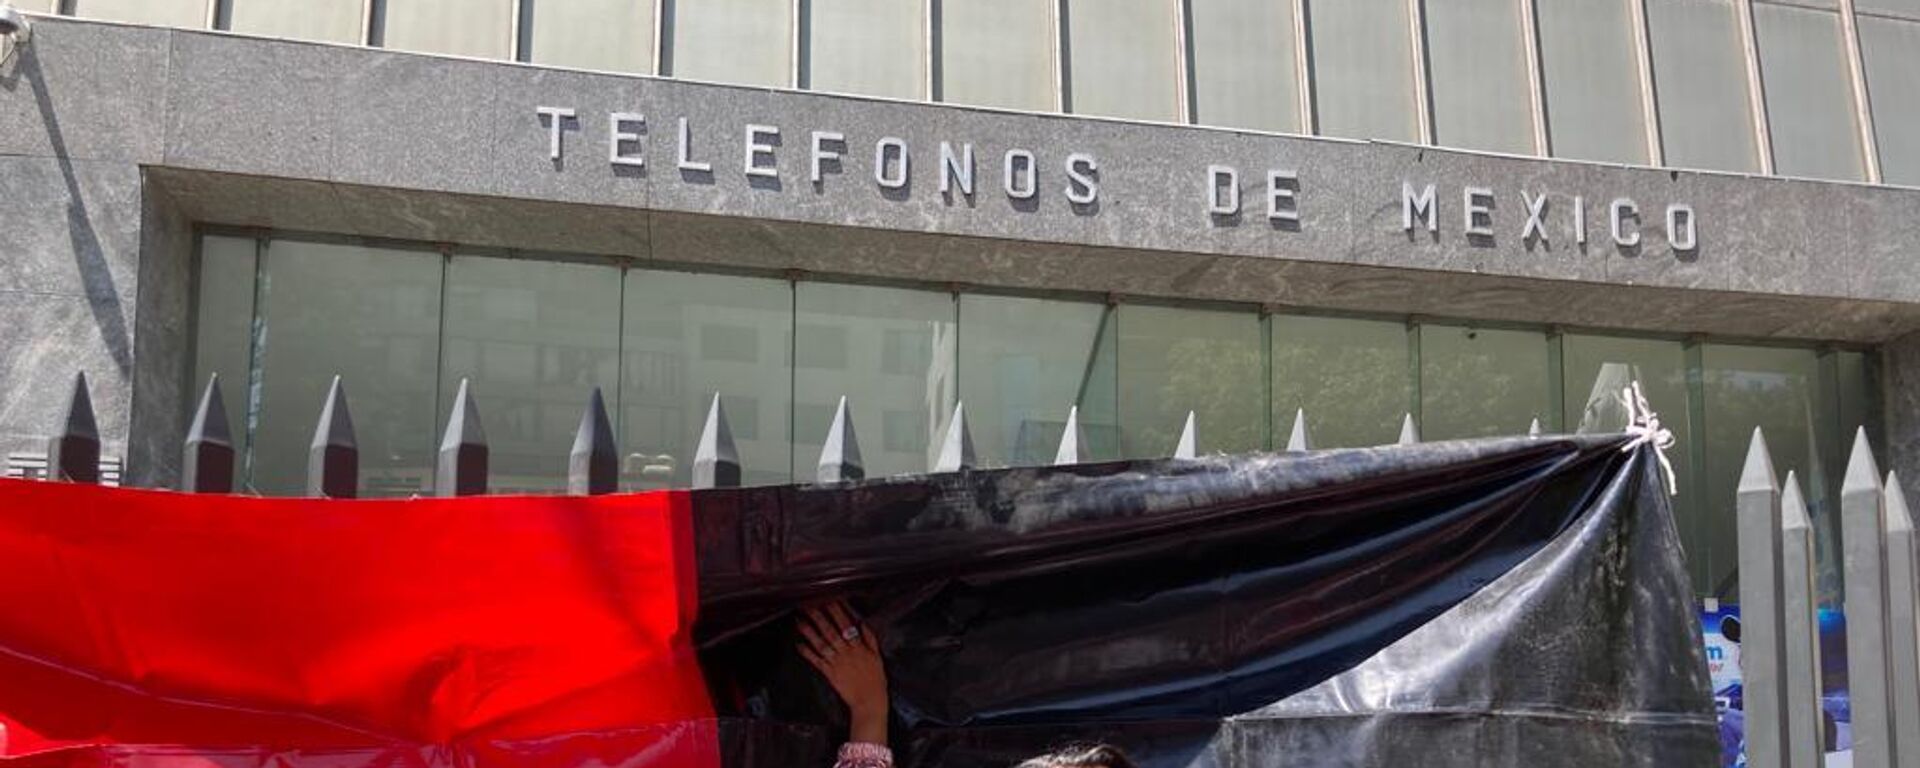 Izado de la bandera rojinegra en la huelga de telefonistas mexicanos. - Sputnik Mundo, 1920, 21.07.2022